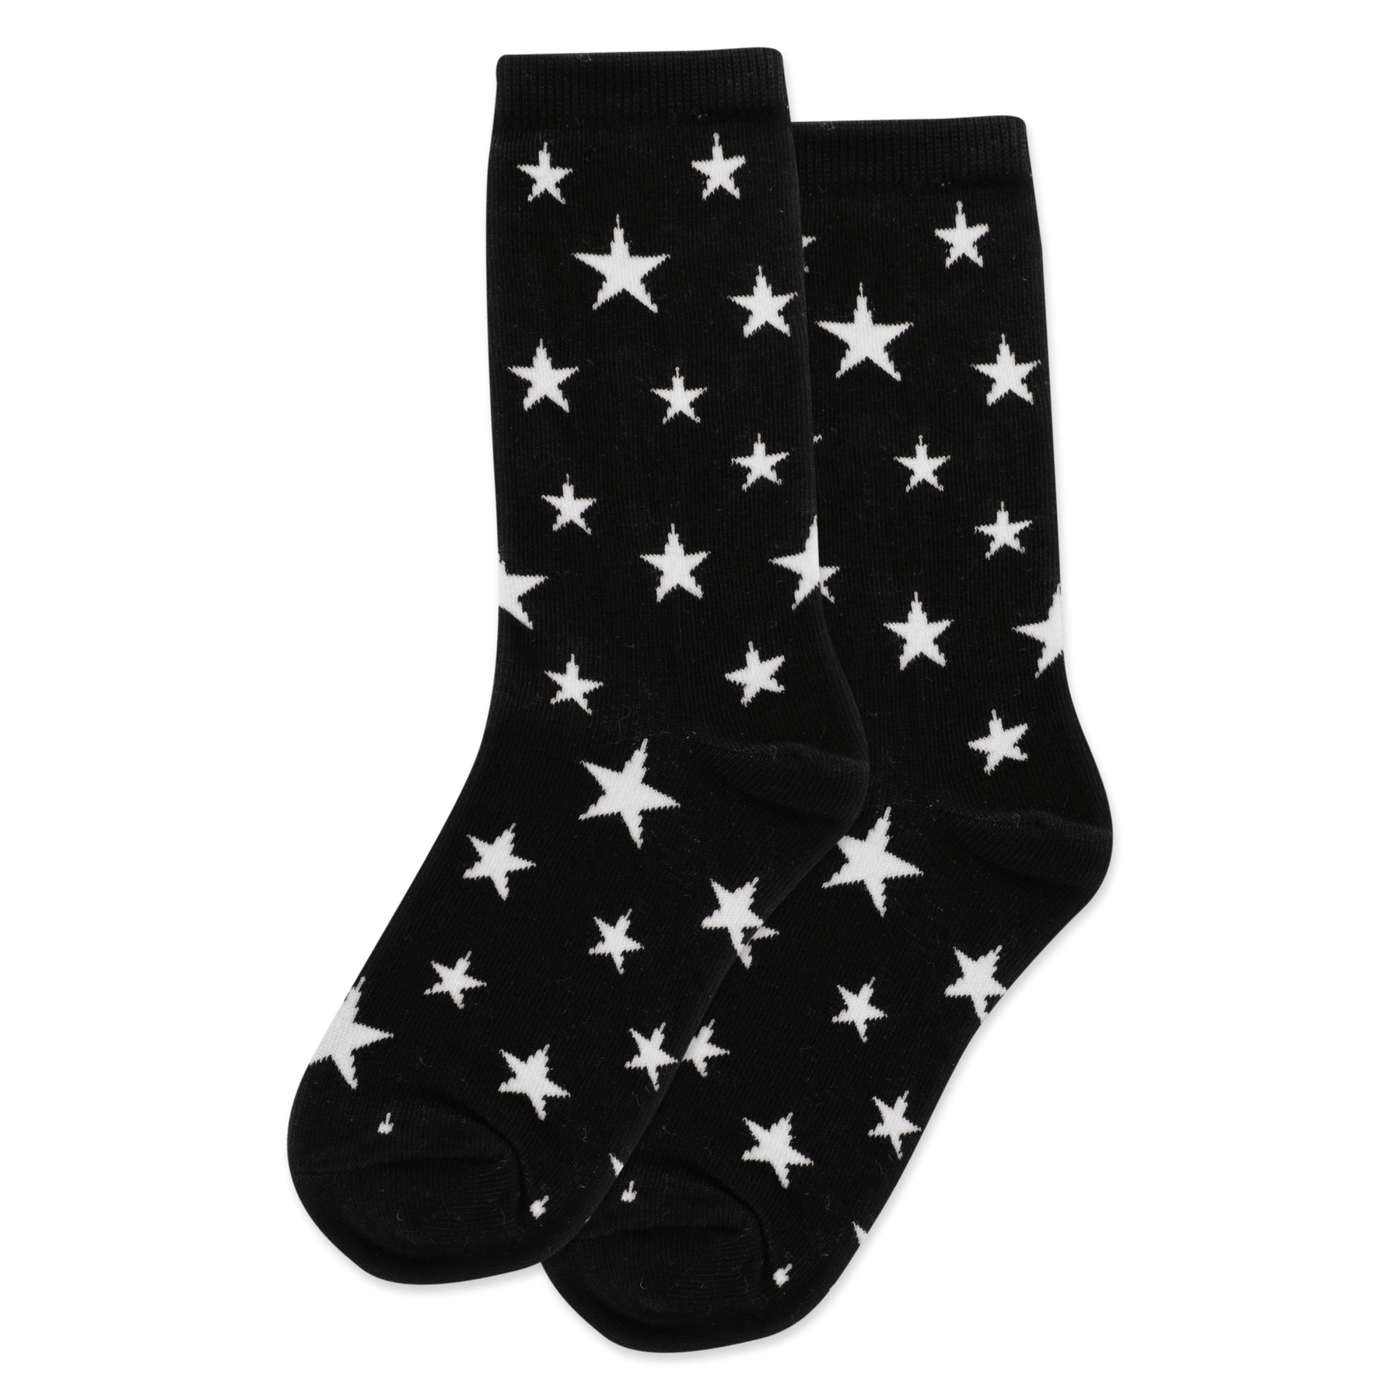 Kids "Stars" Glow-in-the-Dark Crew Socks by Hot Sox